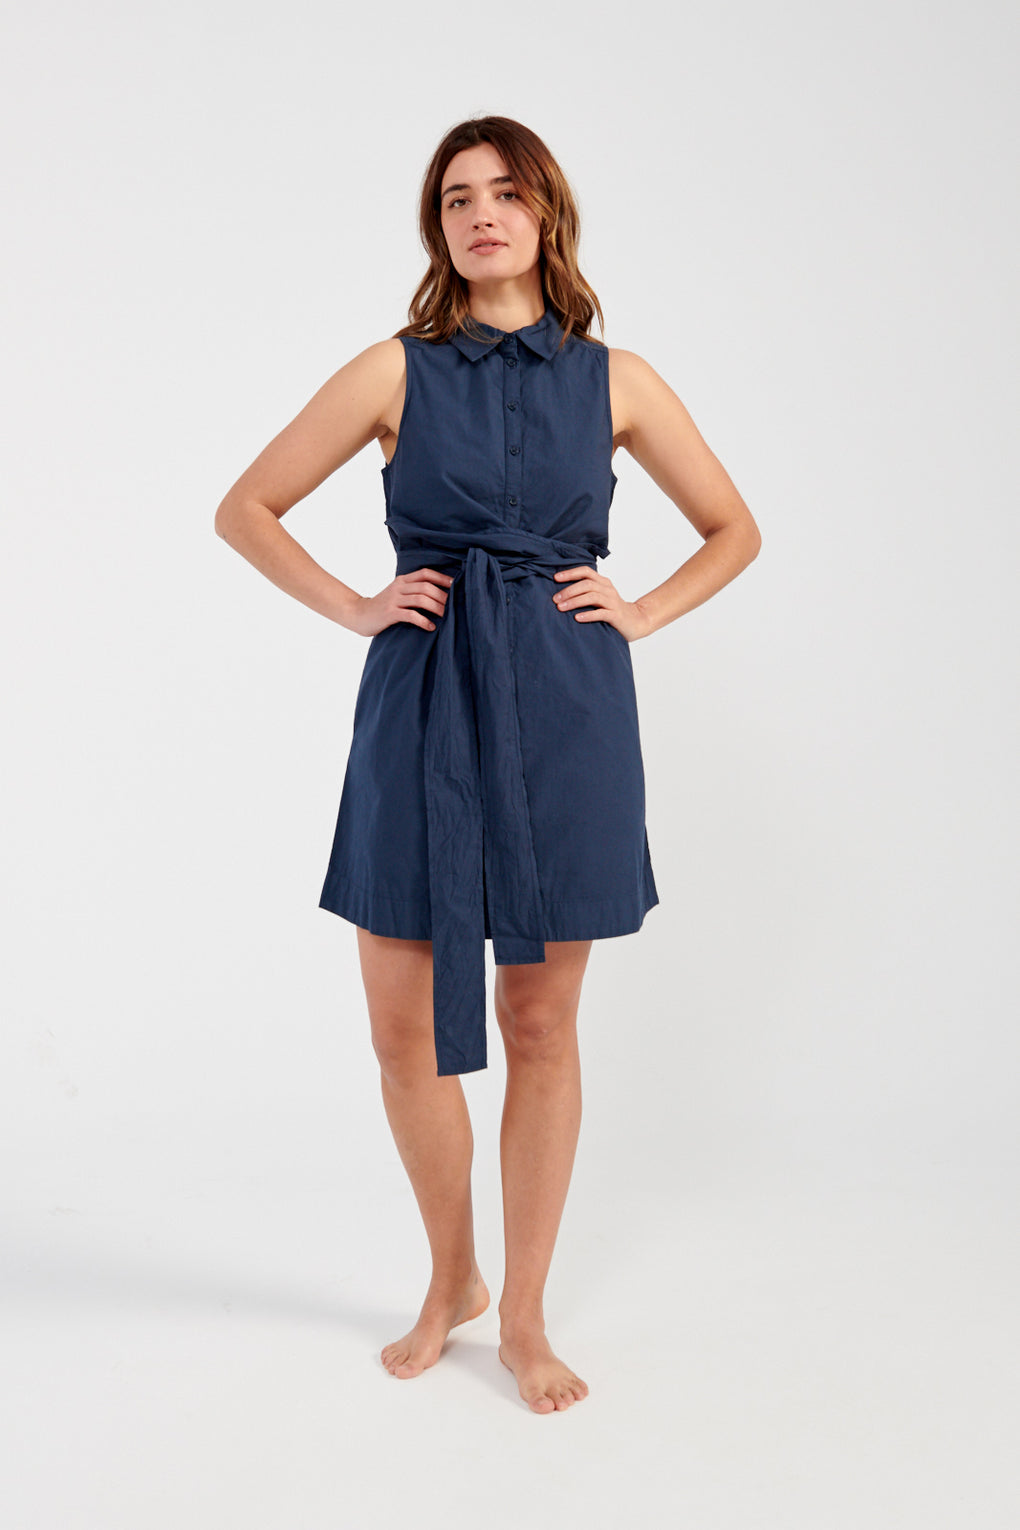 Apiece Apart Rio Tie Mini Dress navy-Apiece Apart blue mini dress-Idun-St. Paul